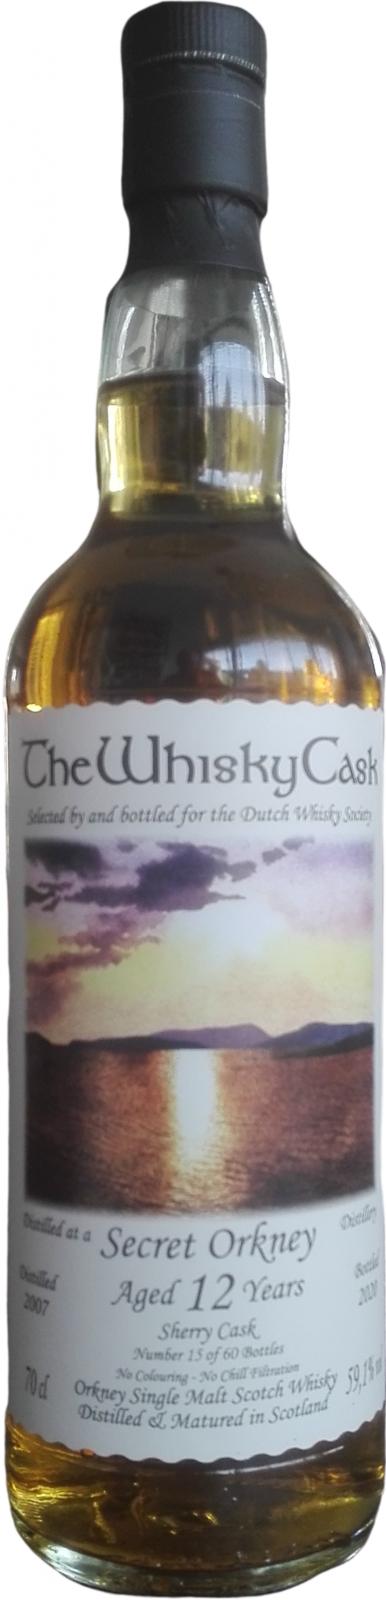 Secret Orkney Distillery 2007 TWC Sherry Cask the Dutch Whisky Society 59.1% 700ml